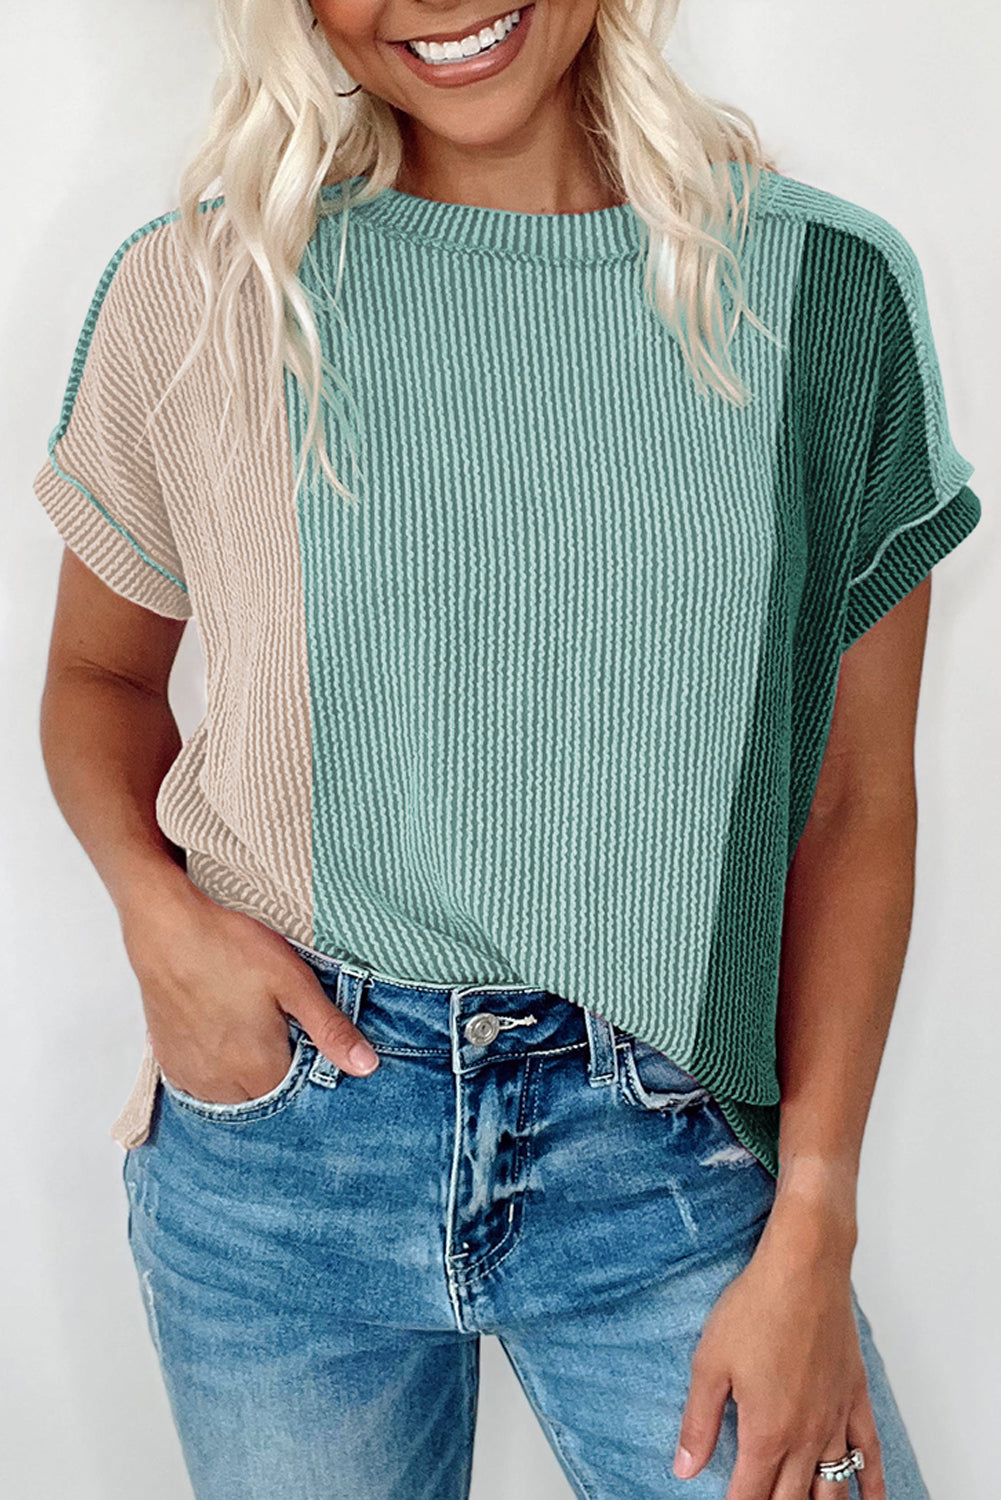 Mintgrünes, strukturiertes Colorblock-T-Shirt mit Rundhalsausschnitt